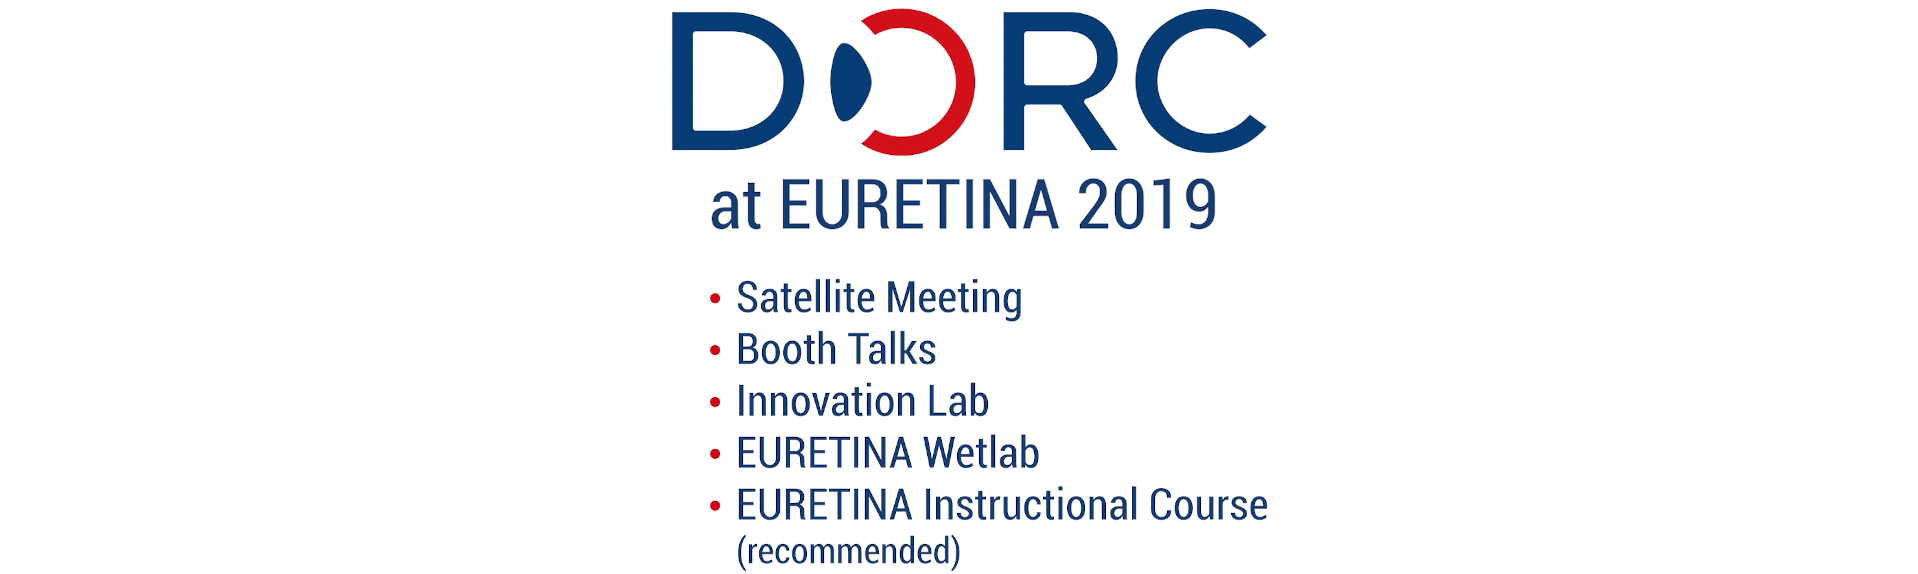 DORC at EURETINA 2019